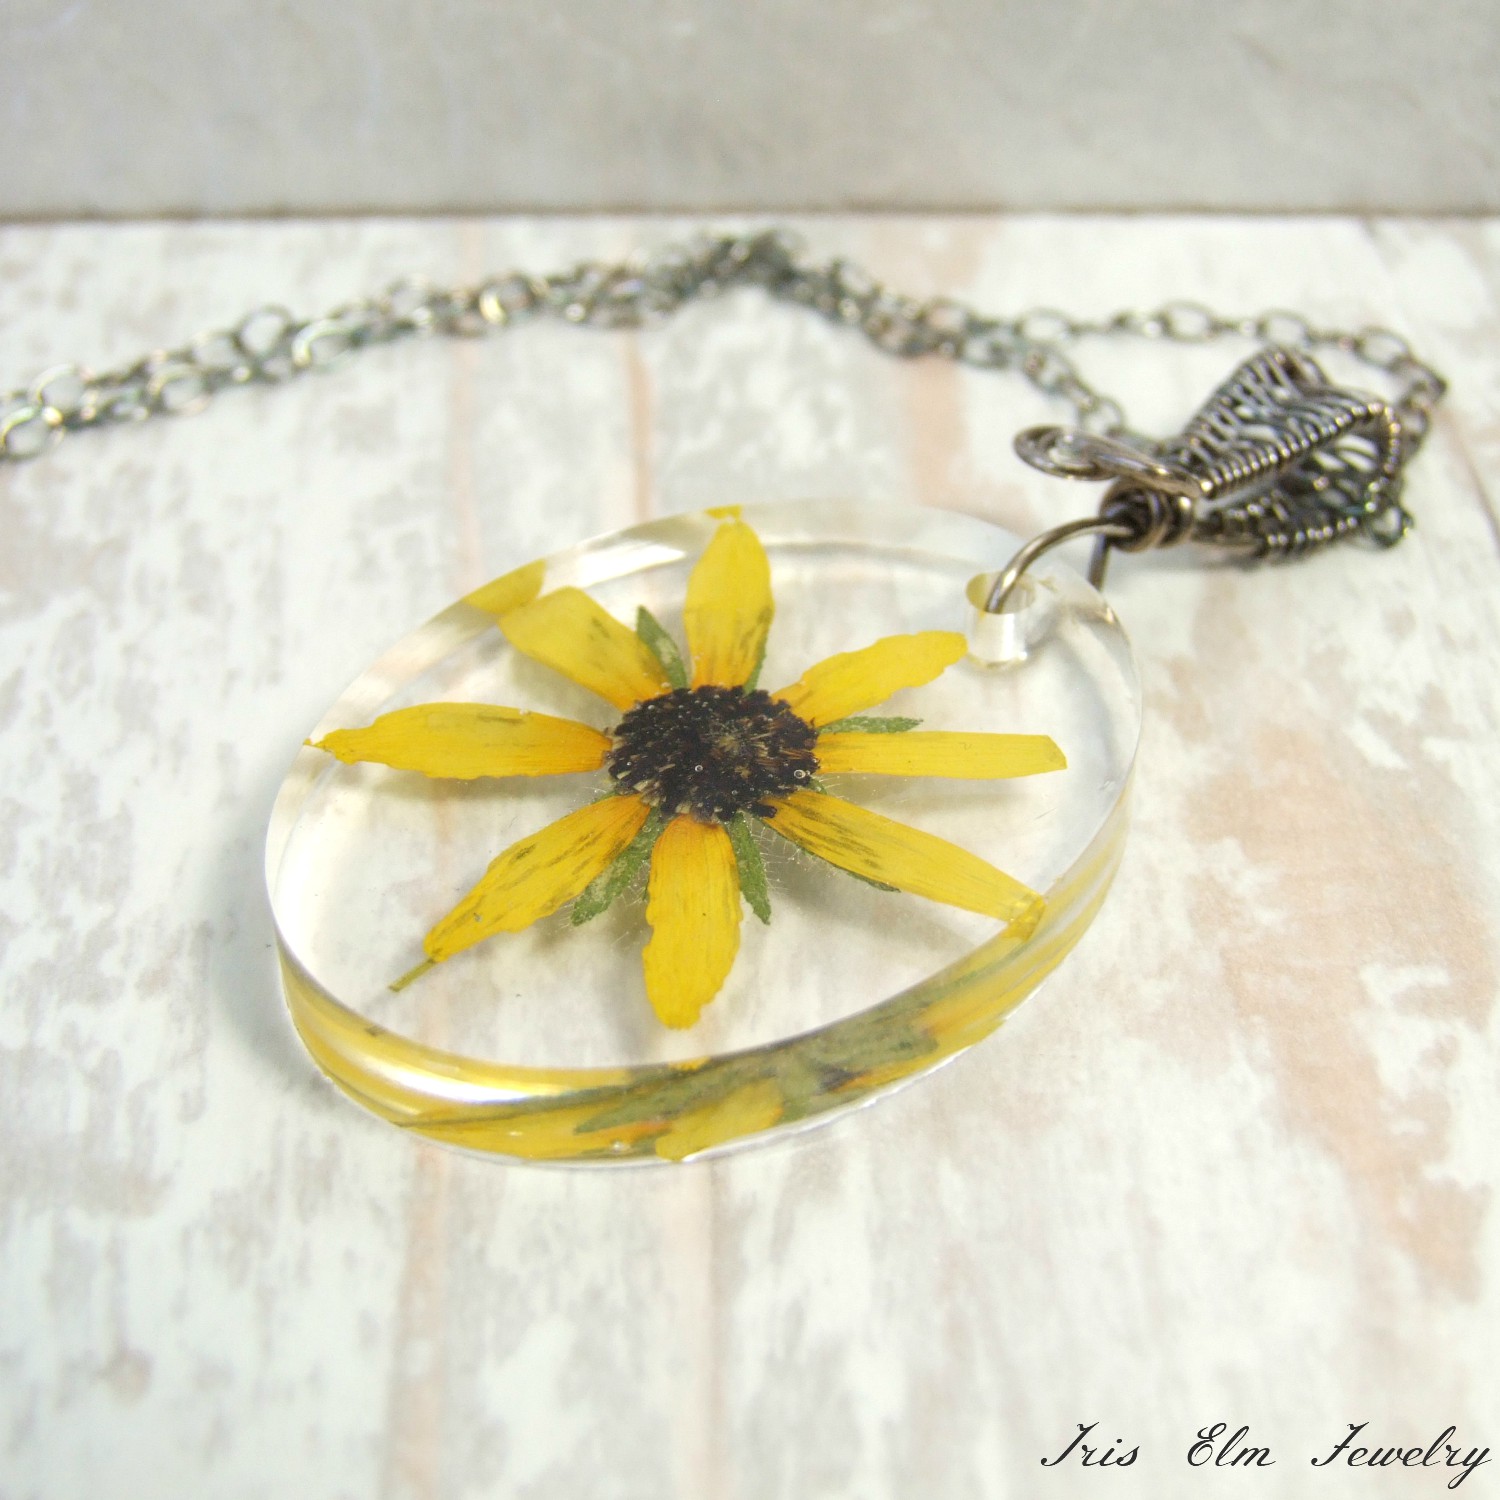 Oxidized Silver Black-Eyed Susan Sunflower Pendant Necklace